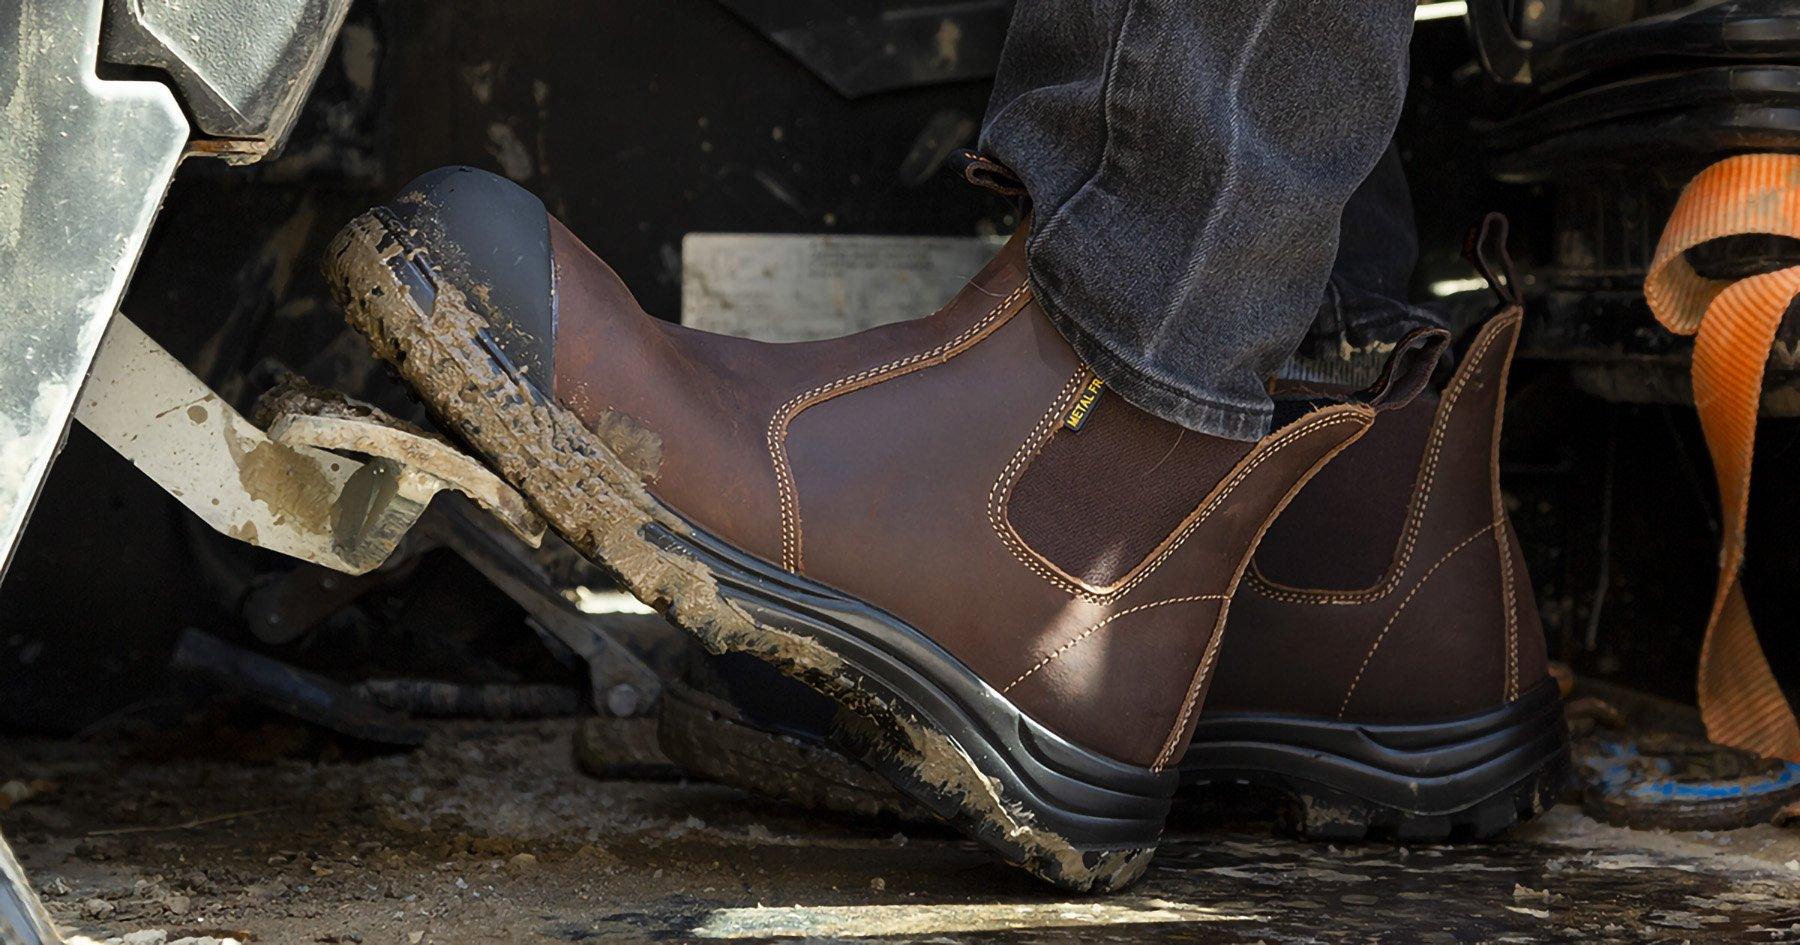 Steel Toe Boots in Canada - MooseLog